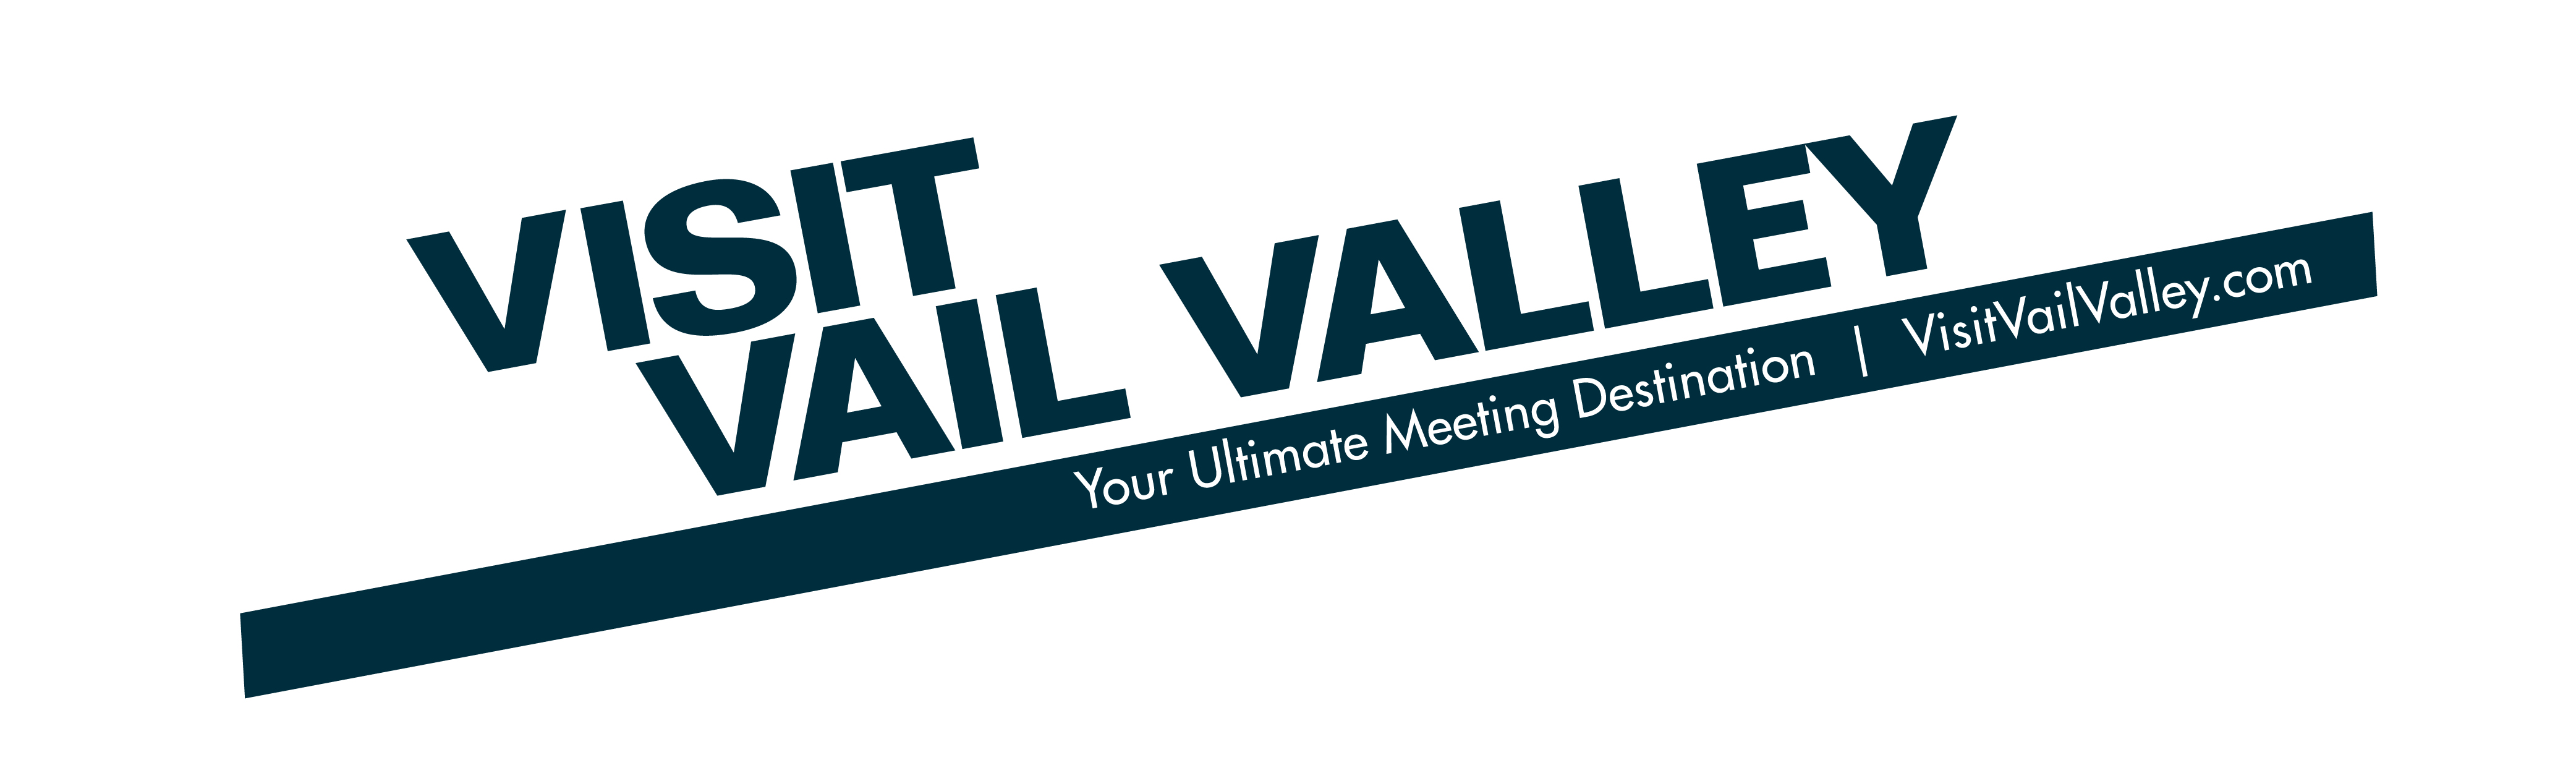 Visit Vail Vall
 ey logo